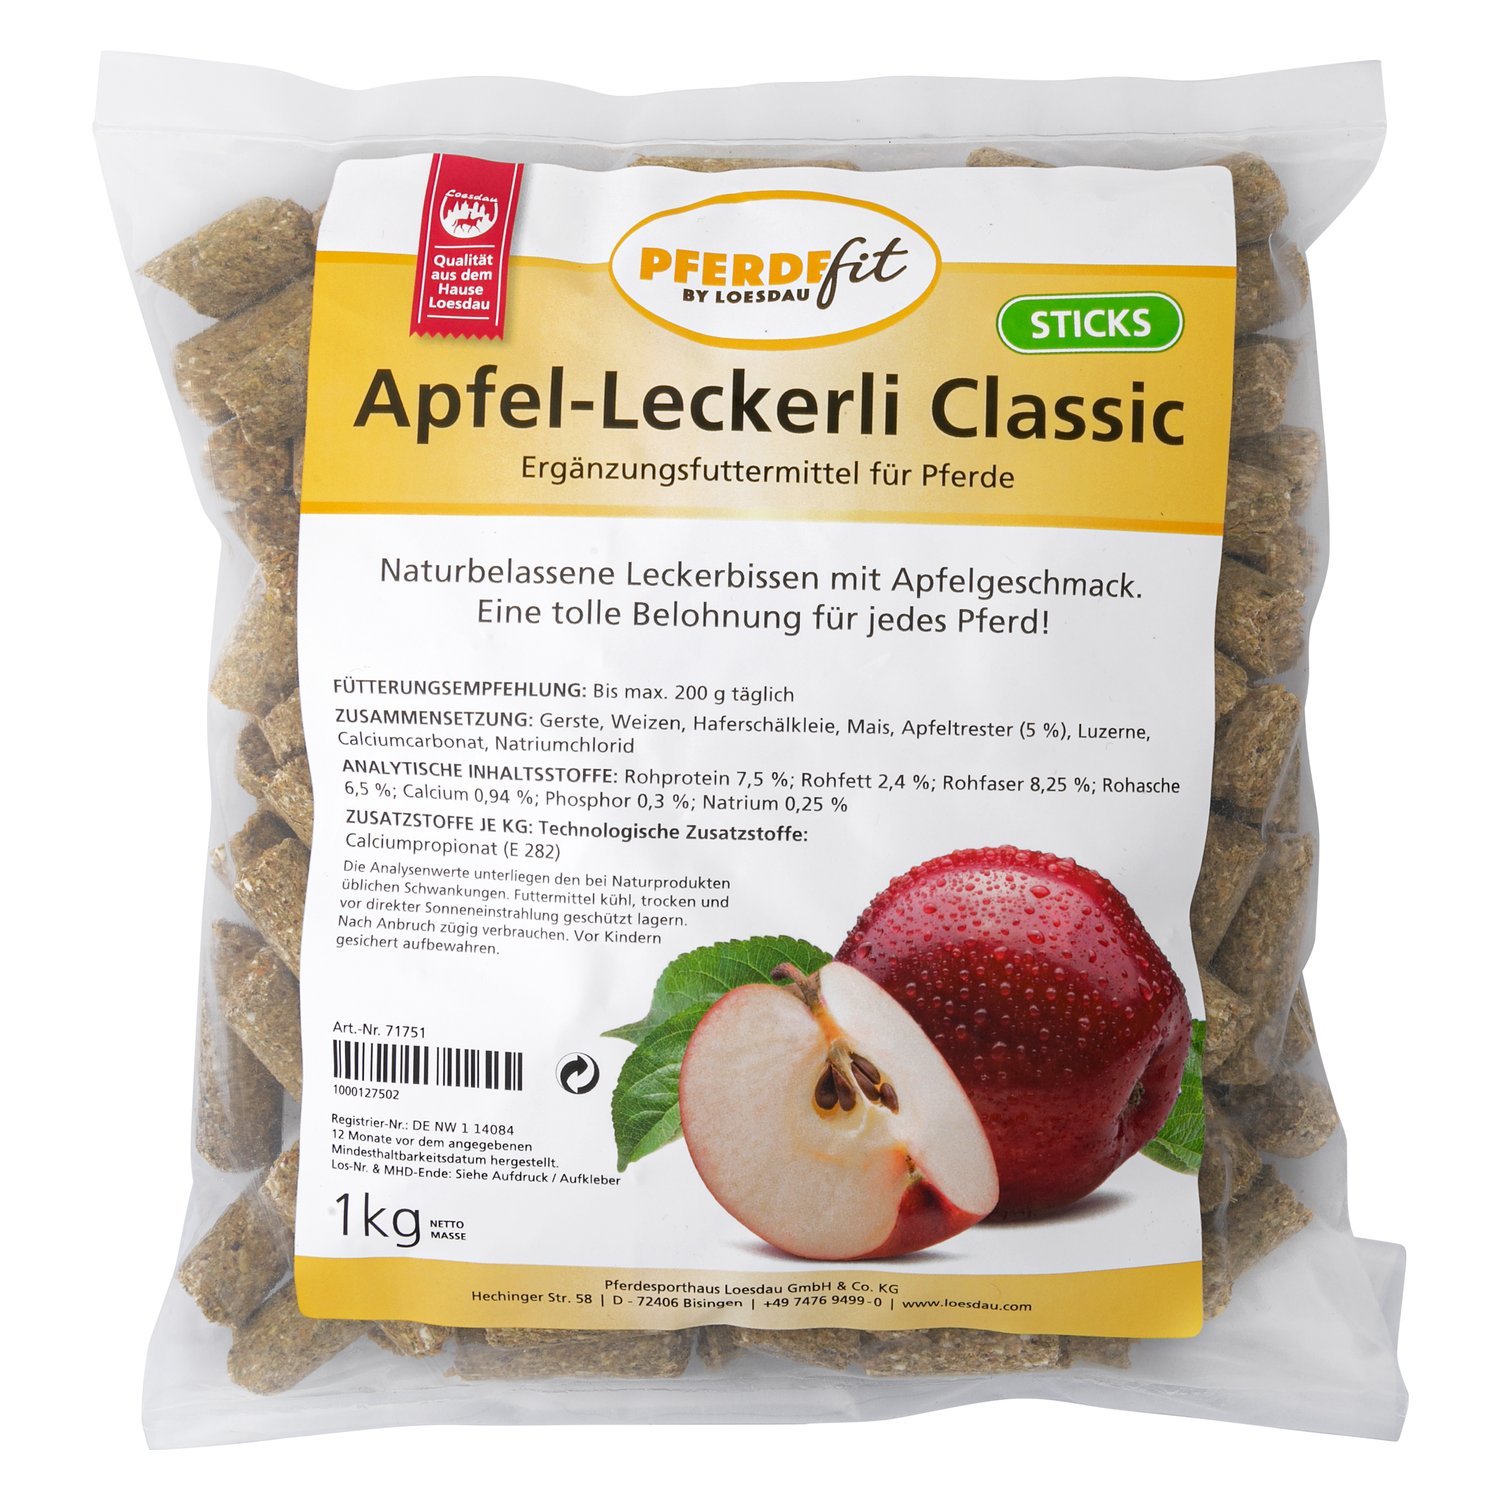 PFERDEfit by Loesdau Apfel-Leckerli Classic 1 kg